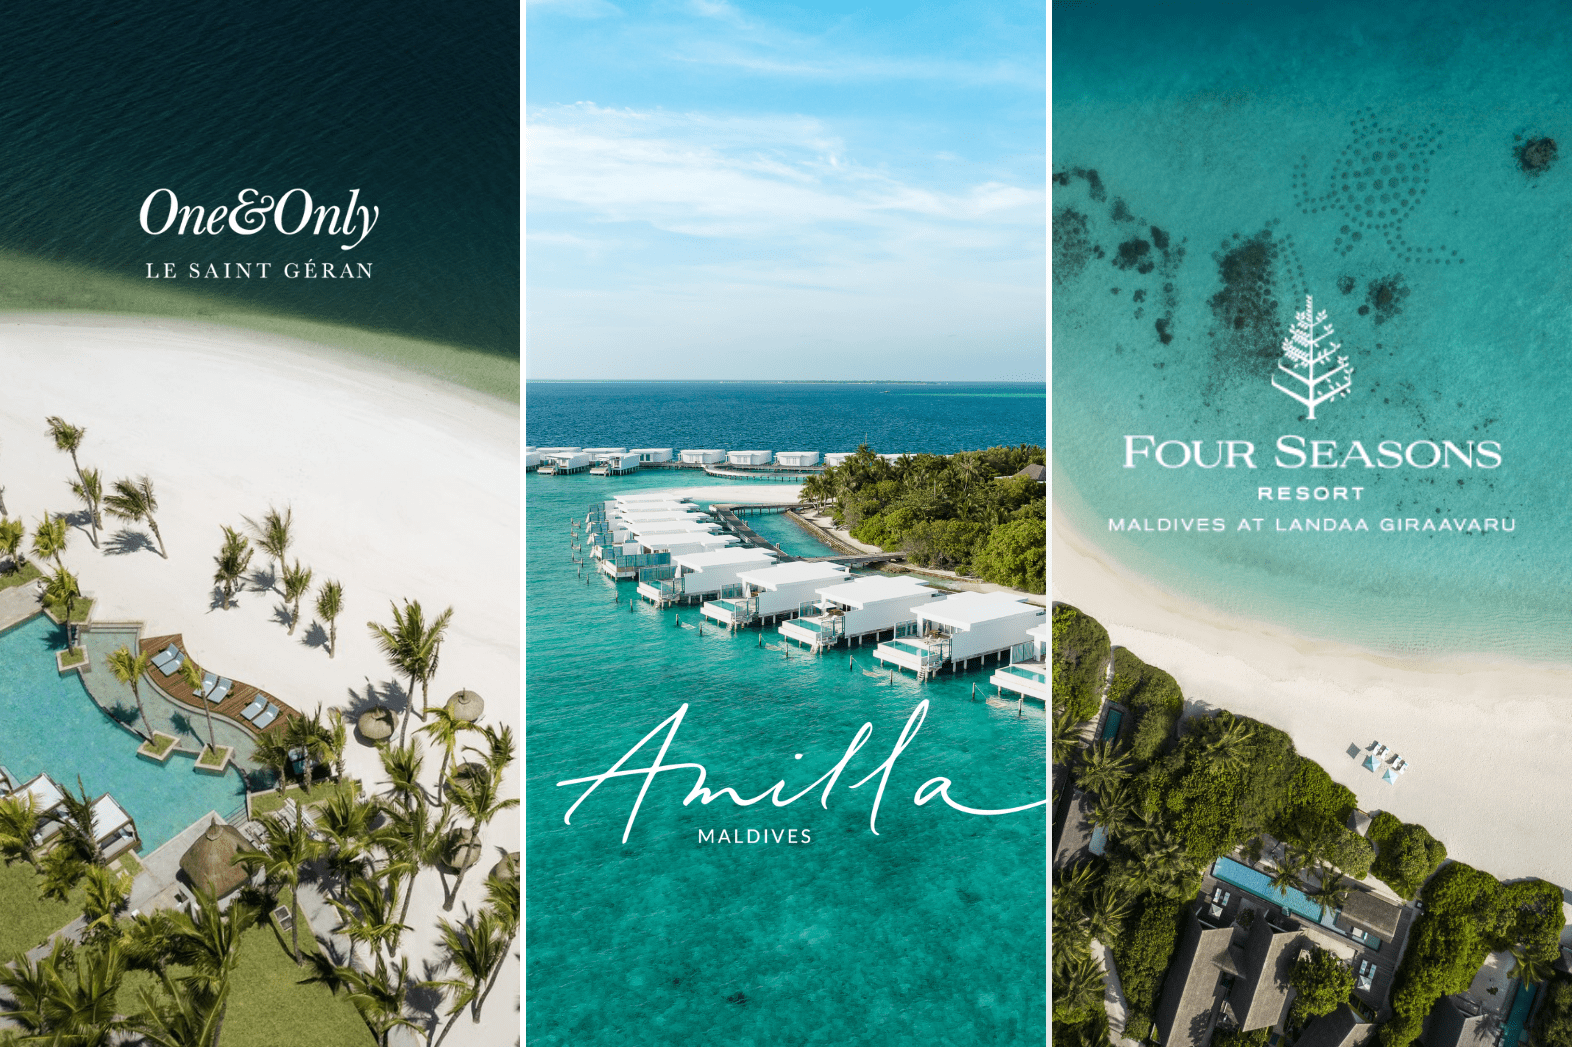 Highlights of the Month: One&Only Le Saint Géran, Amilla Maldives & Four Seasons at Landaa Giraavaru